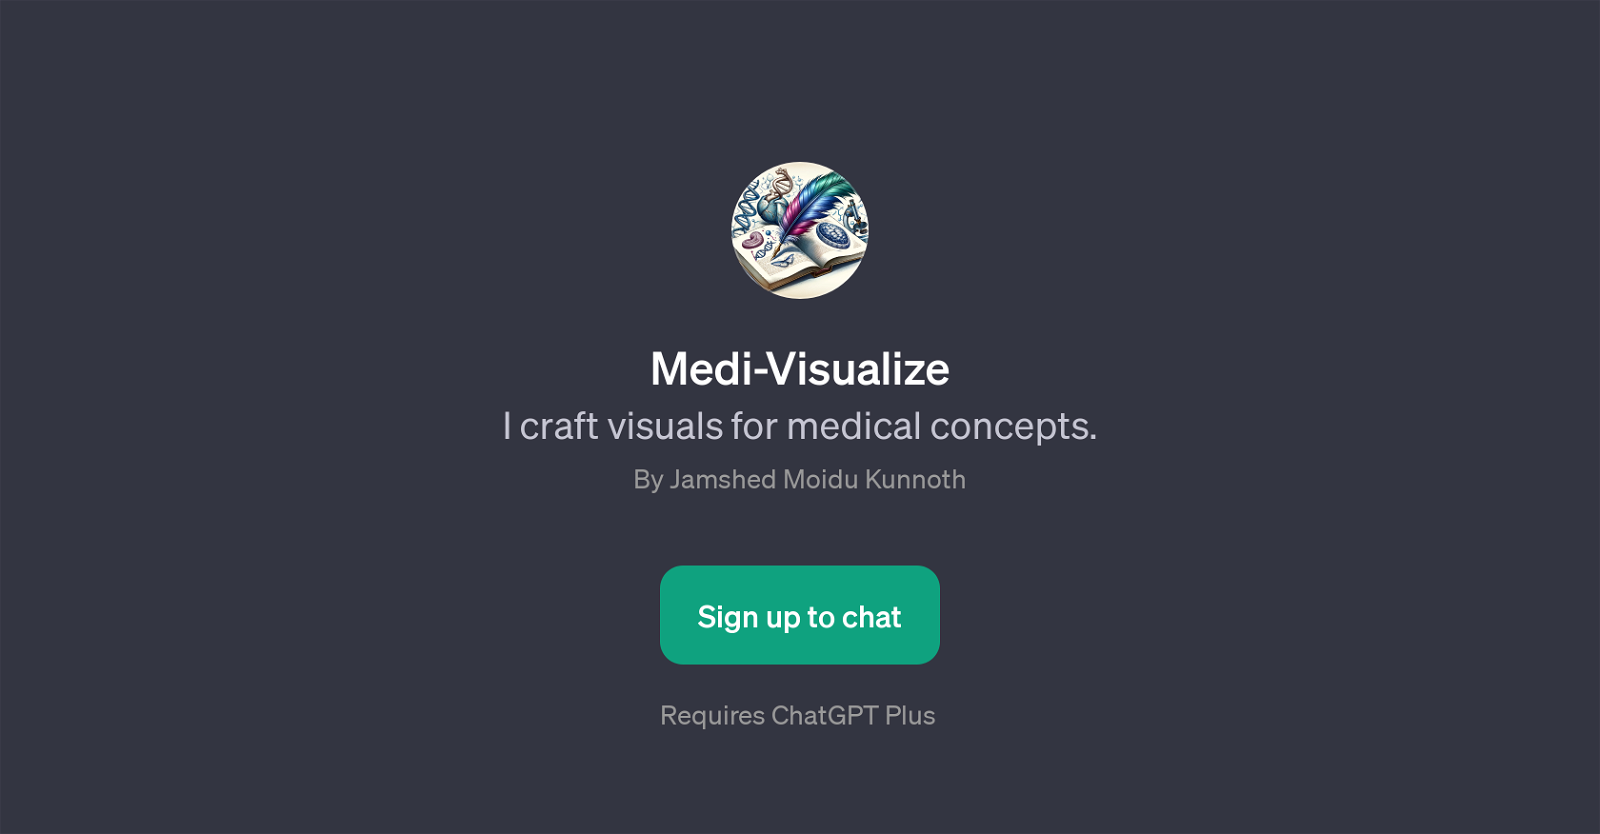 Medi-Visualize website